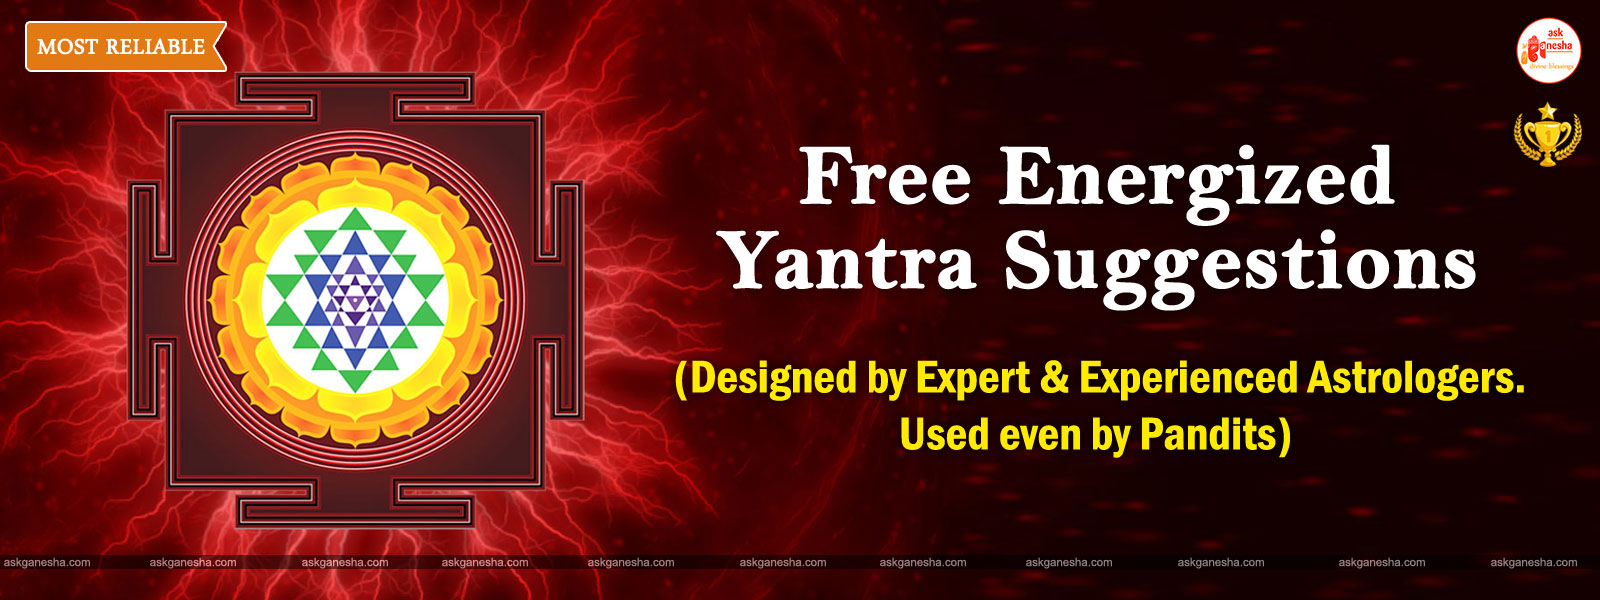 Free Energized Yantra Suggestions